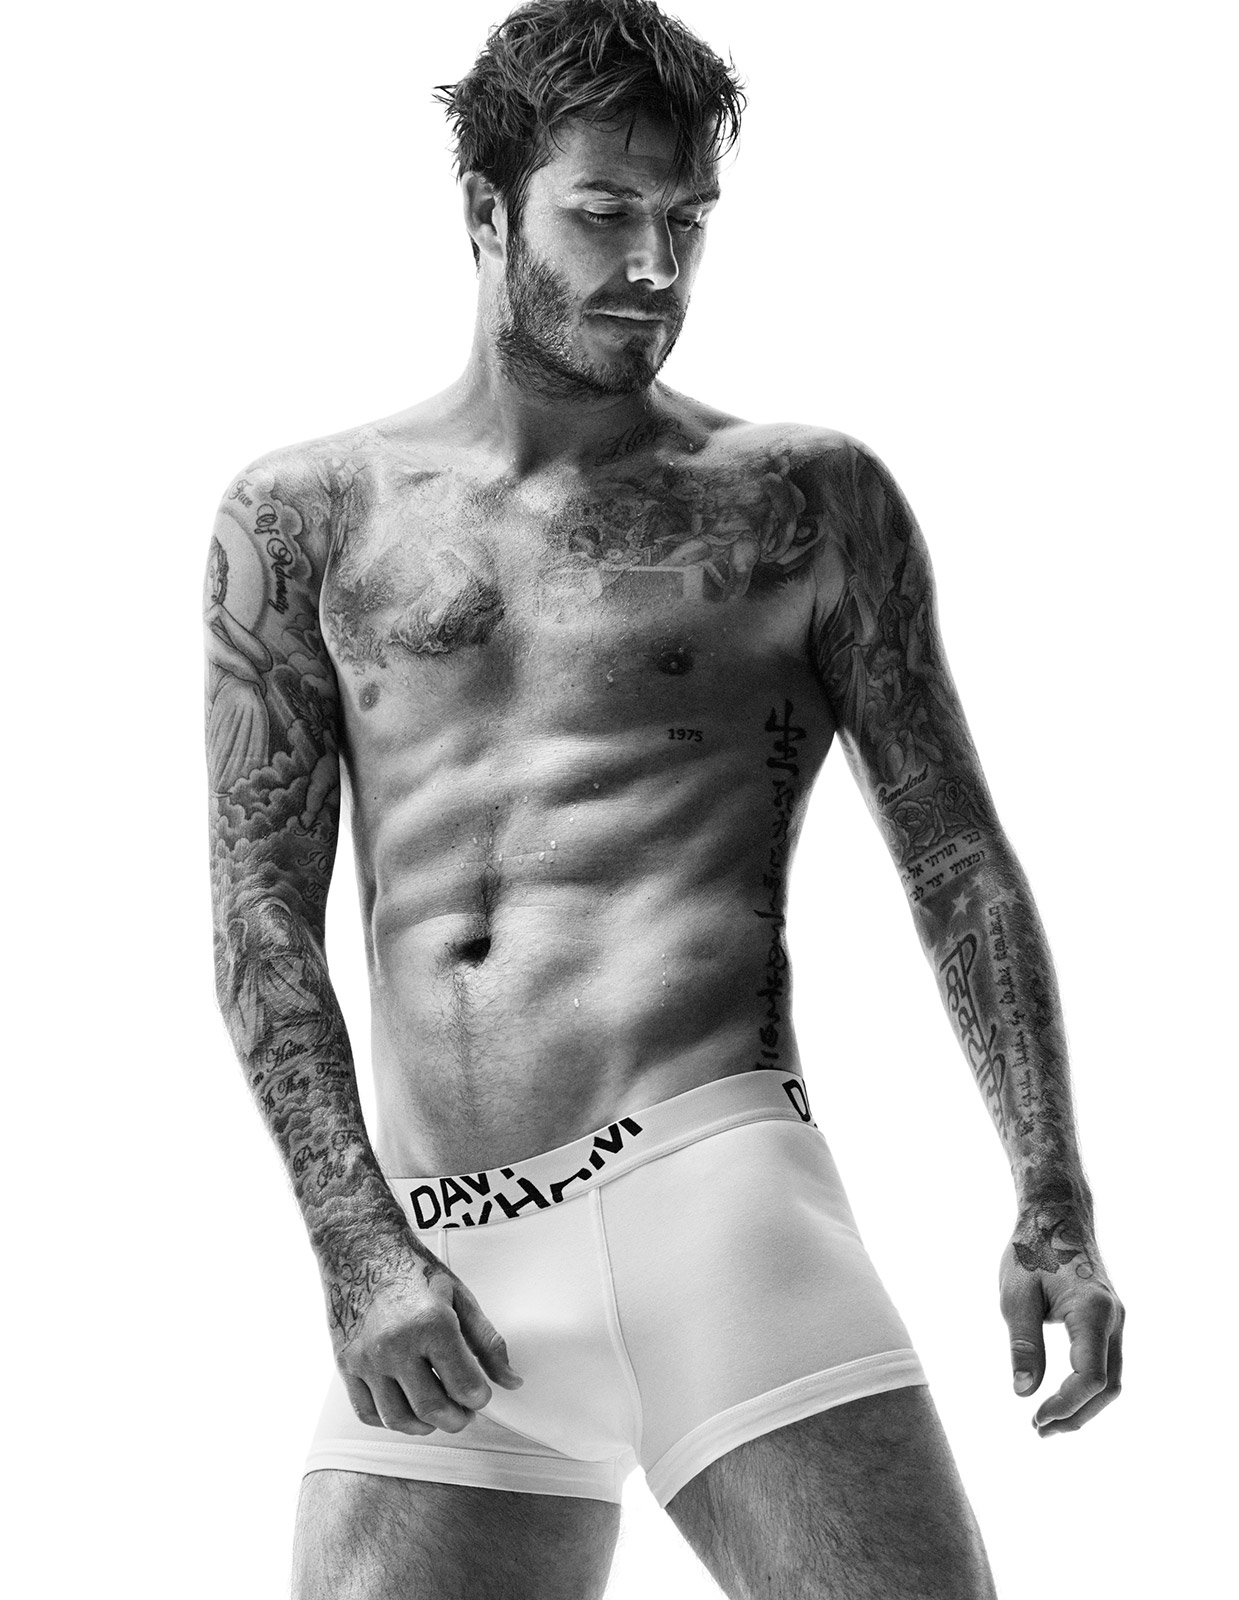 David Beckham Shows Off Buff Body in New H&M Ads - E! Online